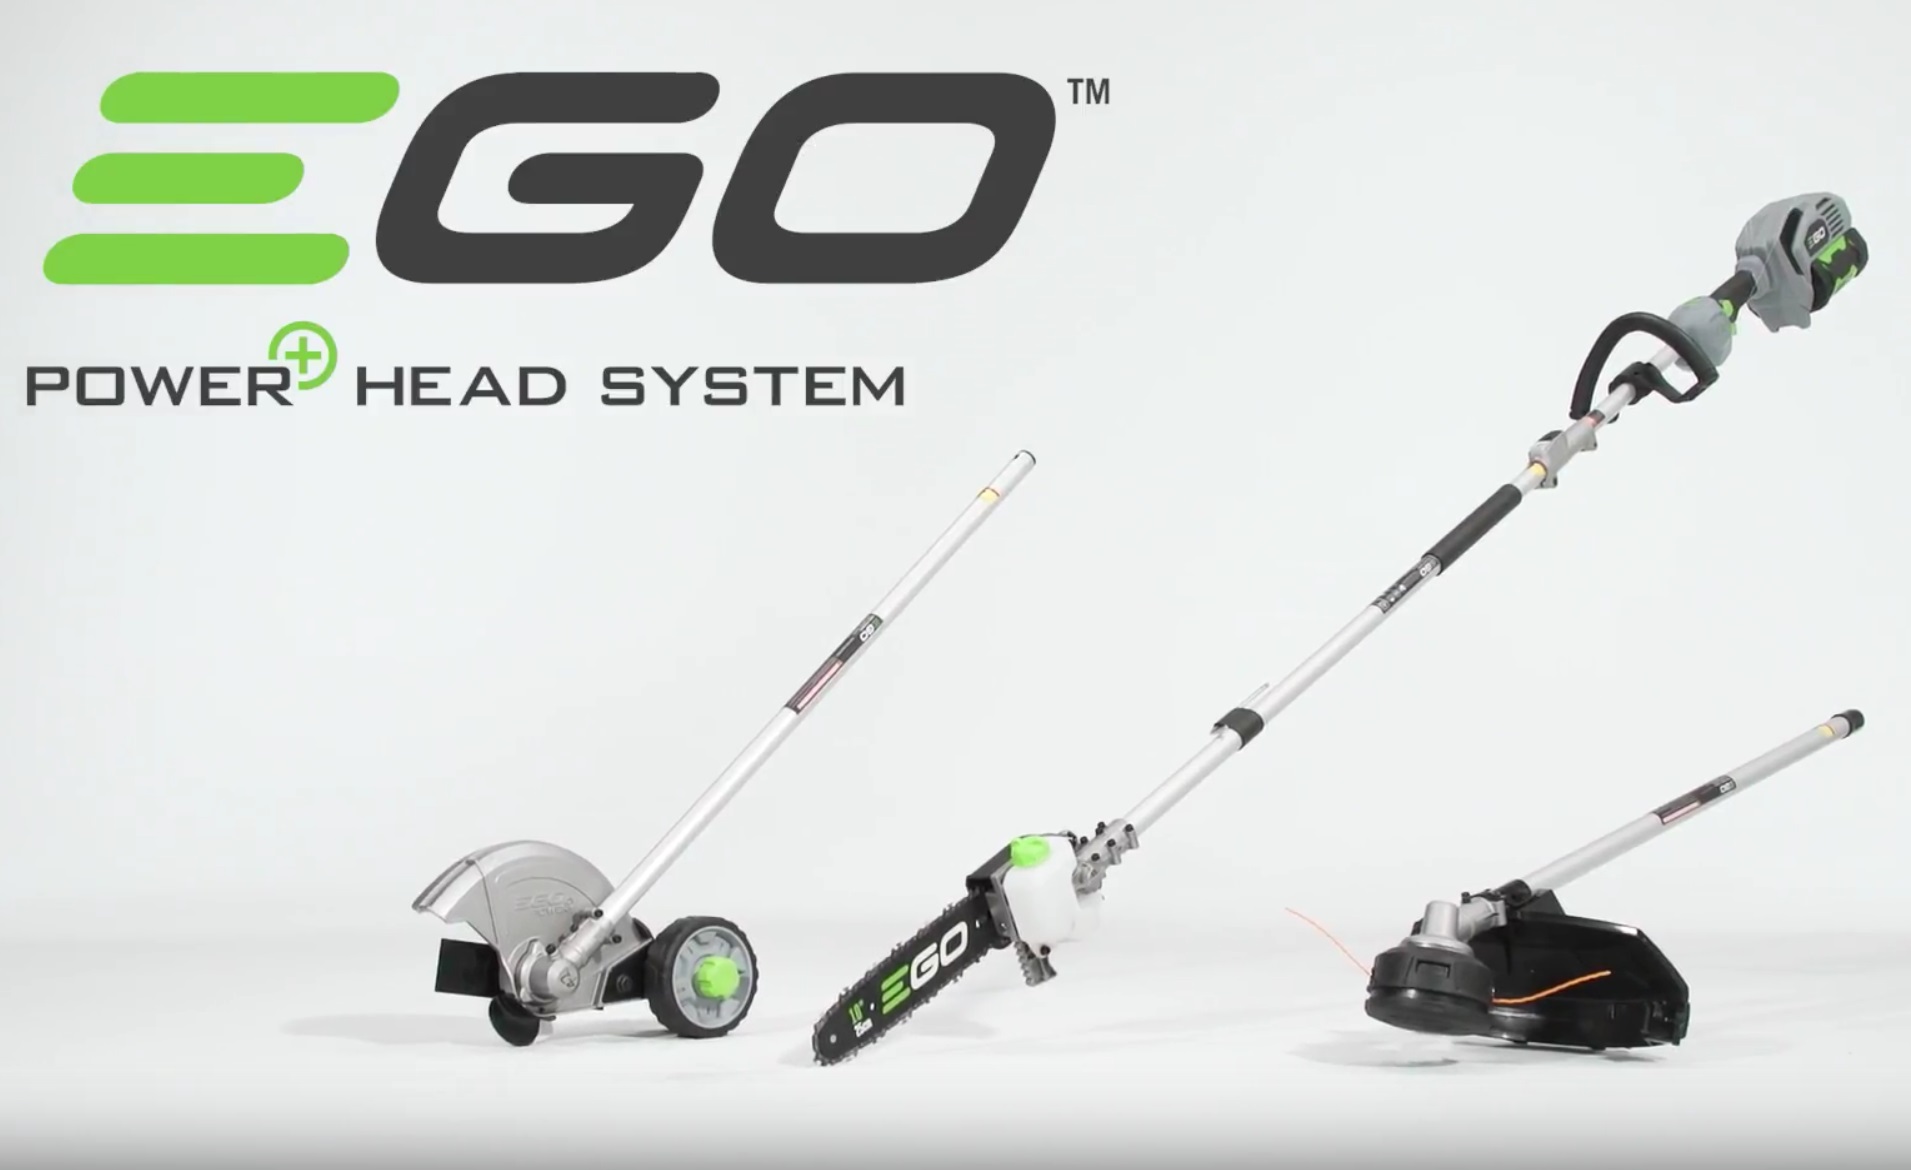 Ego Power Head System Multi Head 56V Outdoor Power Tool System